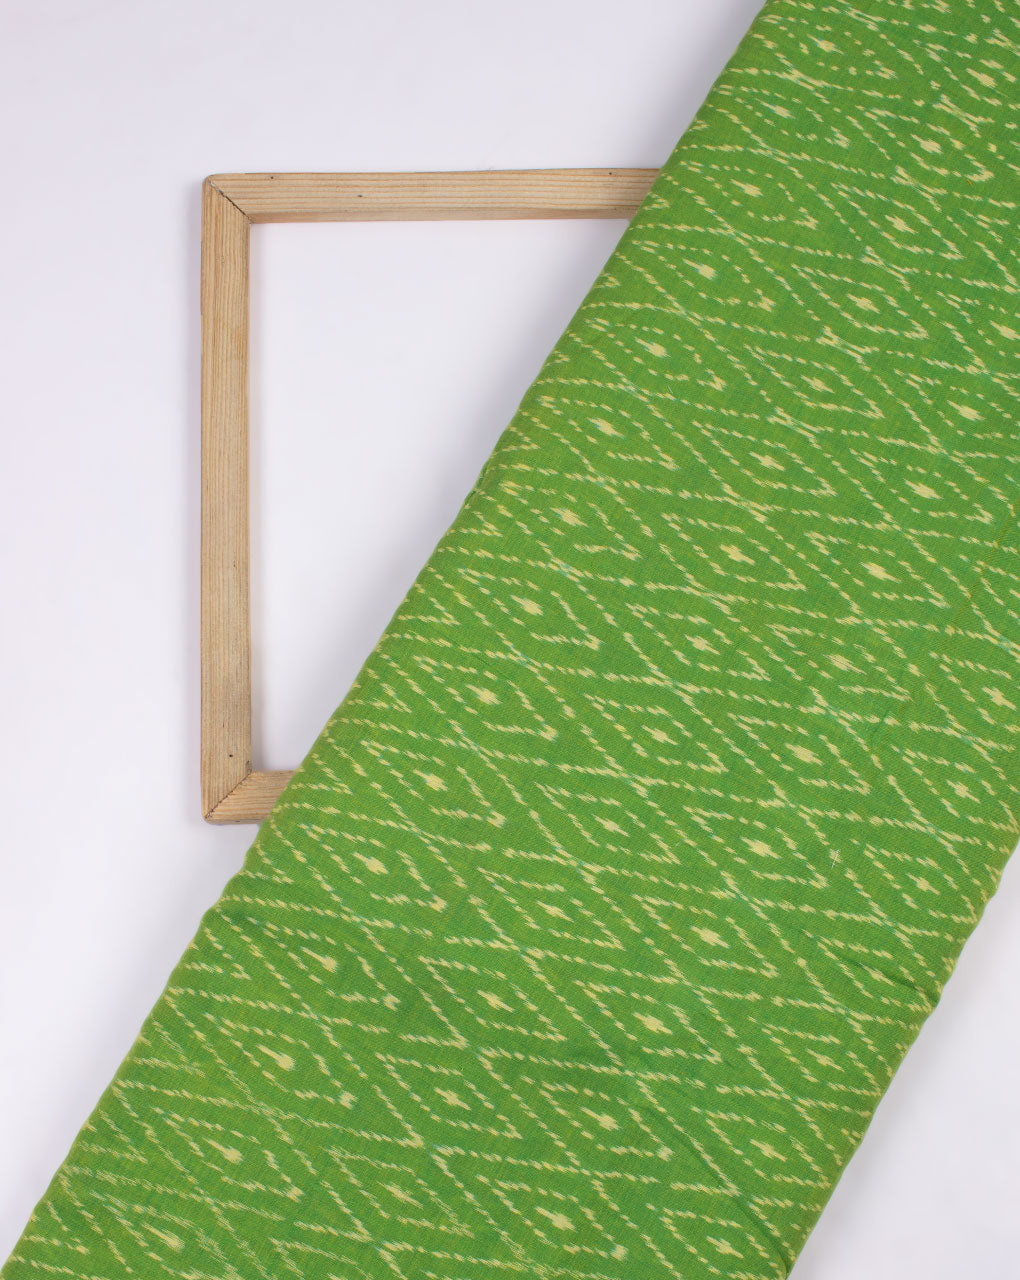 Green & Off-White Chevron Pattern Woven Mercerized Ikat Cotton Fabric - Fabriclore.com